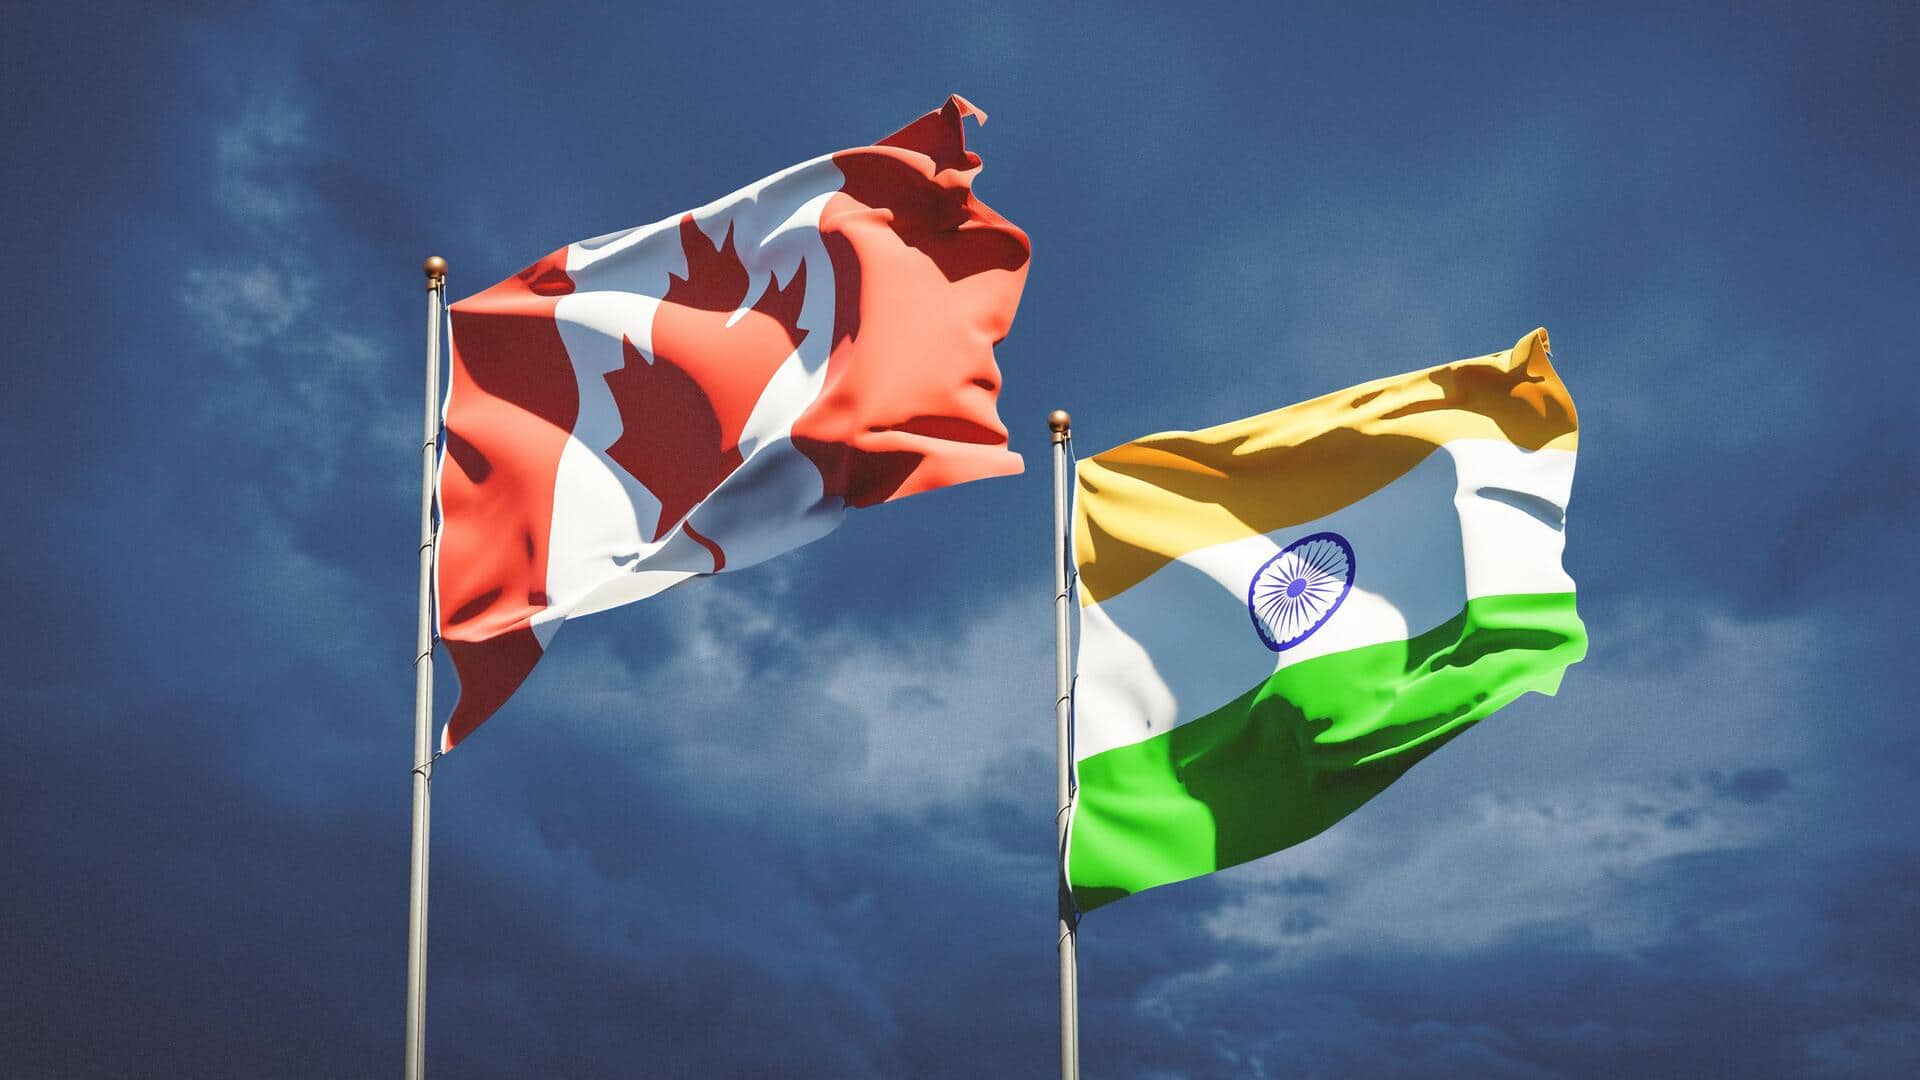 Remain vigilant: Canada to its citizens in India amid row